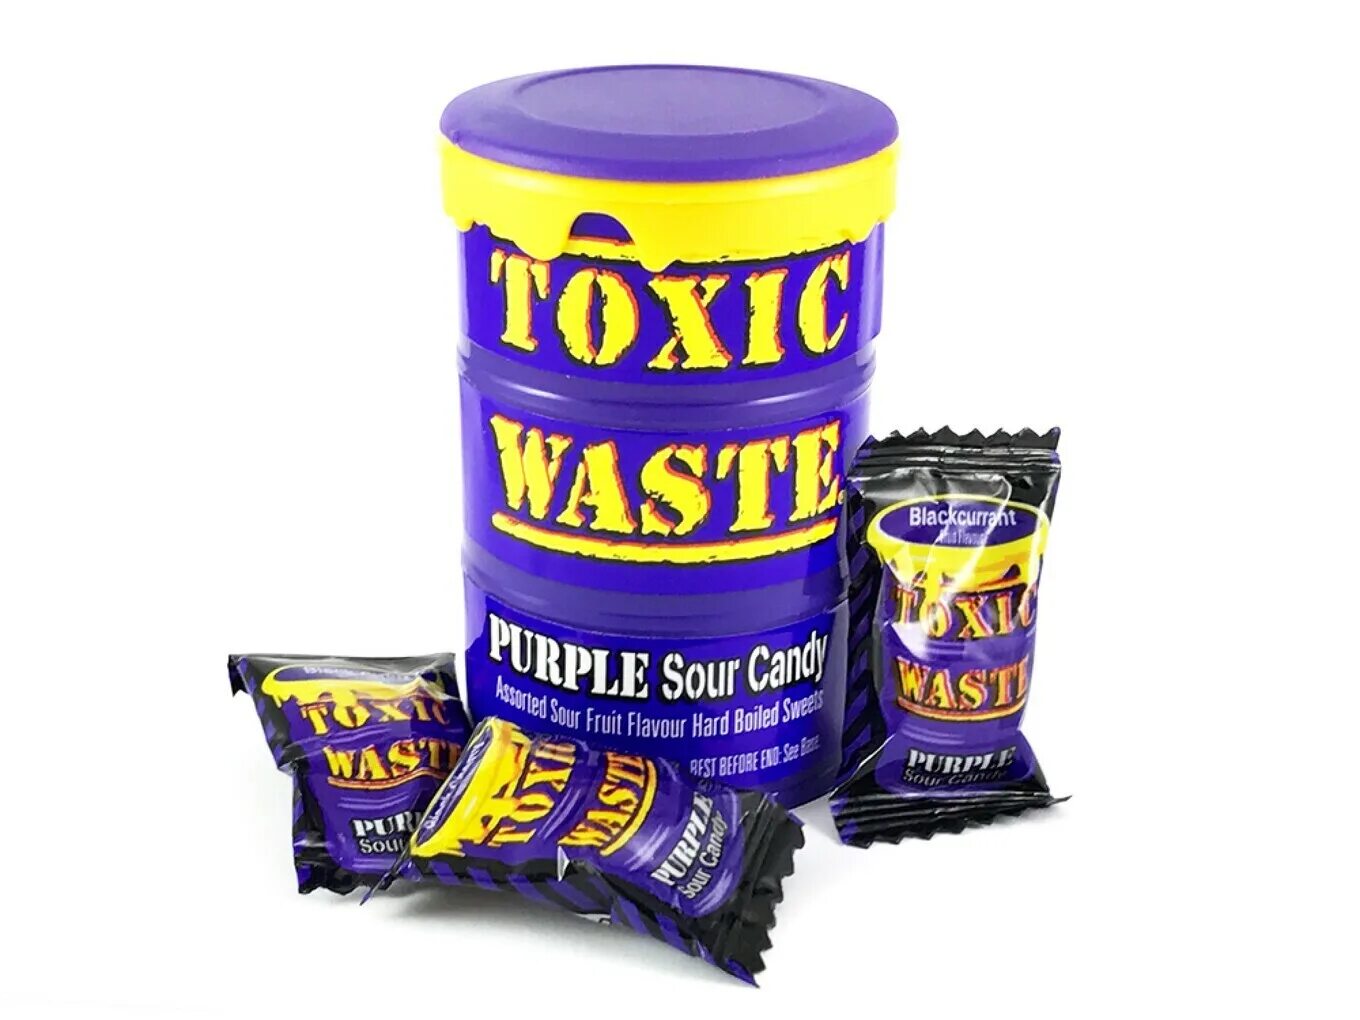 Toxic waste конфеты. Леденцы Toxic waste Purple 42гр. Леденцы Toxic waste Tub Purple 42 гр. Кислые конфеты Toxic waste.